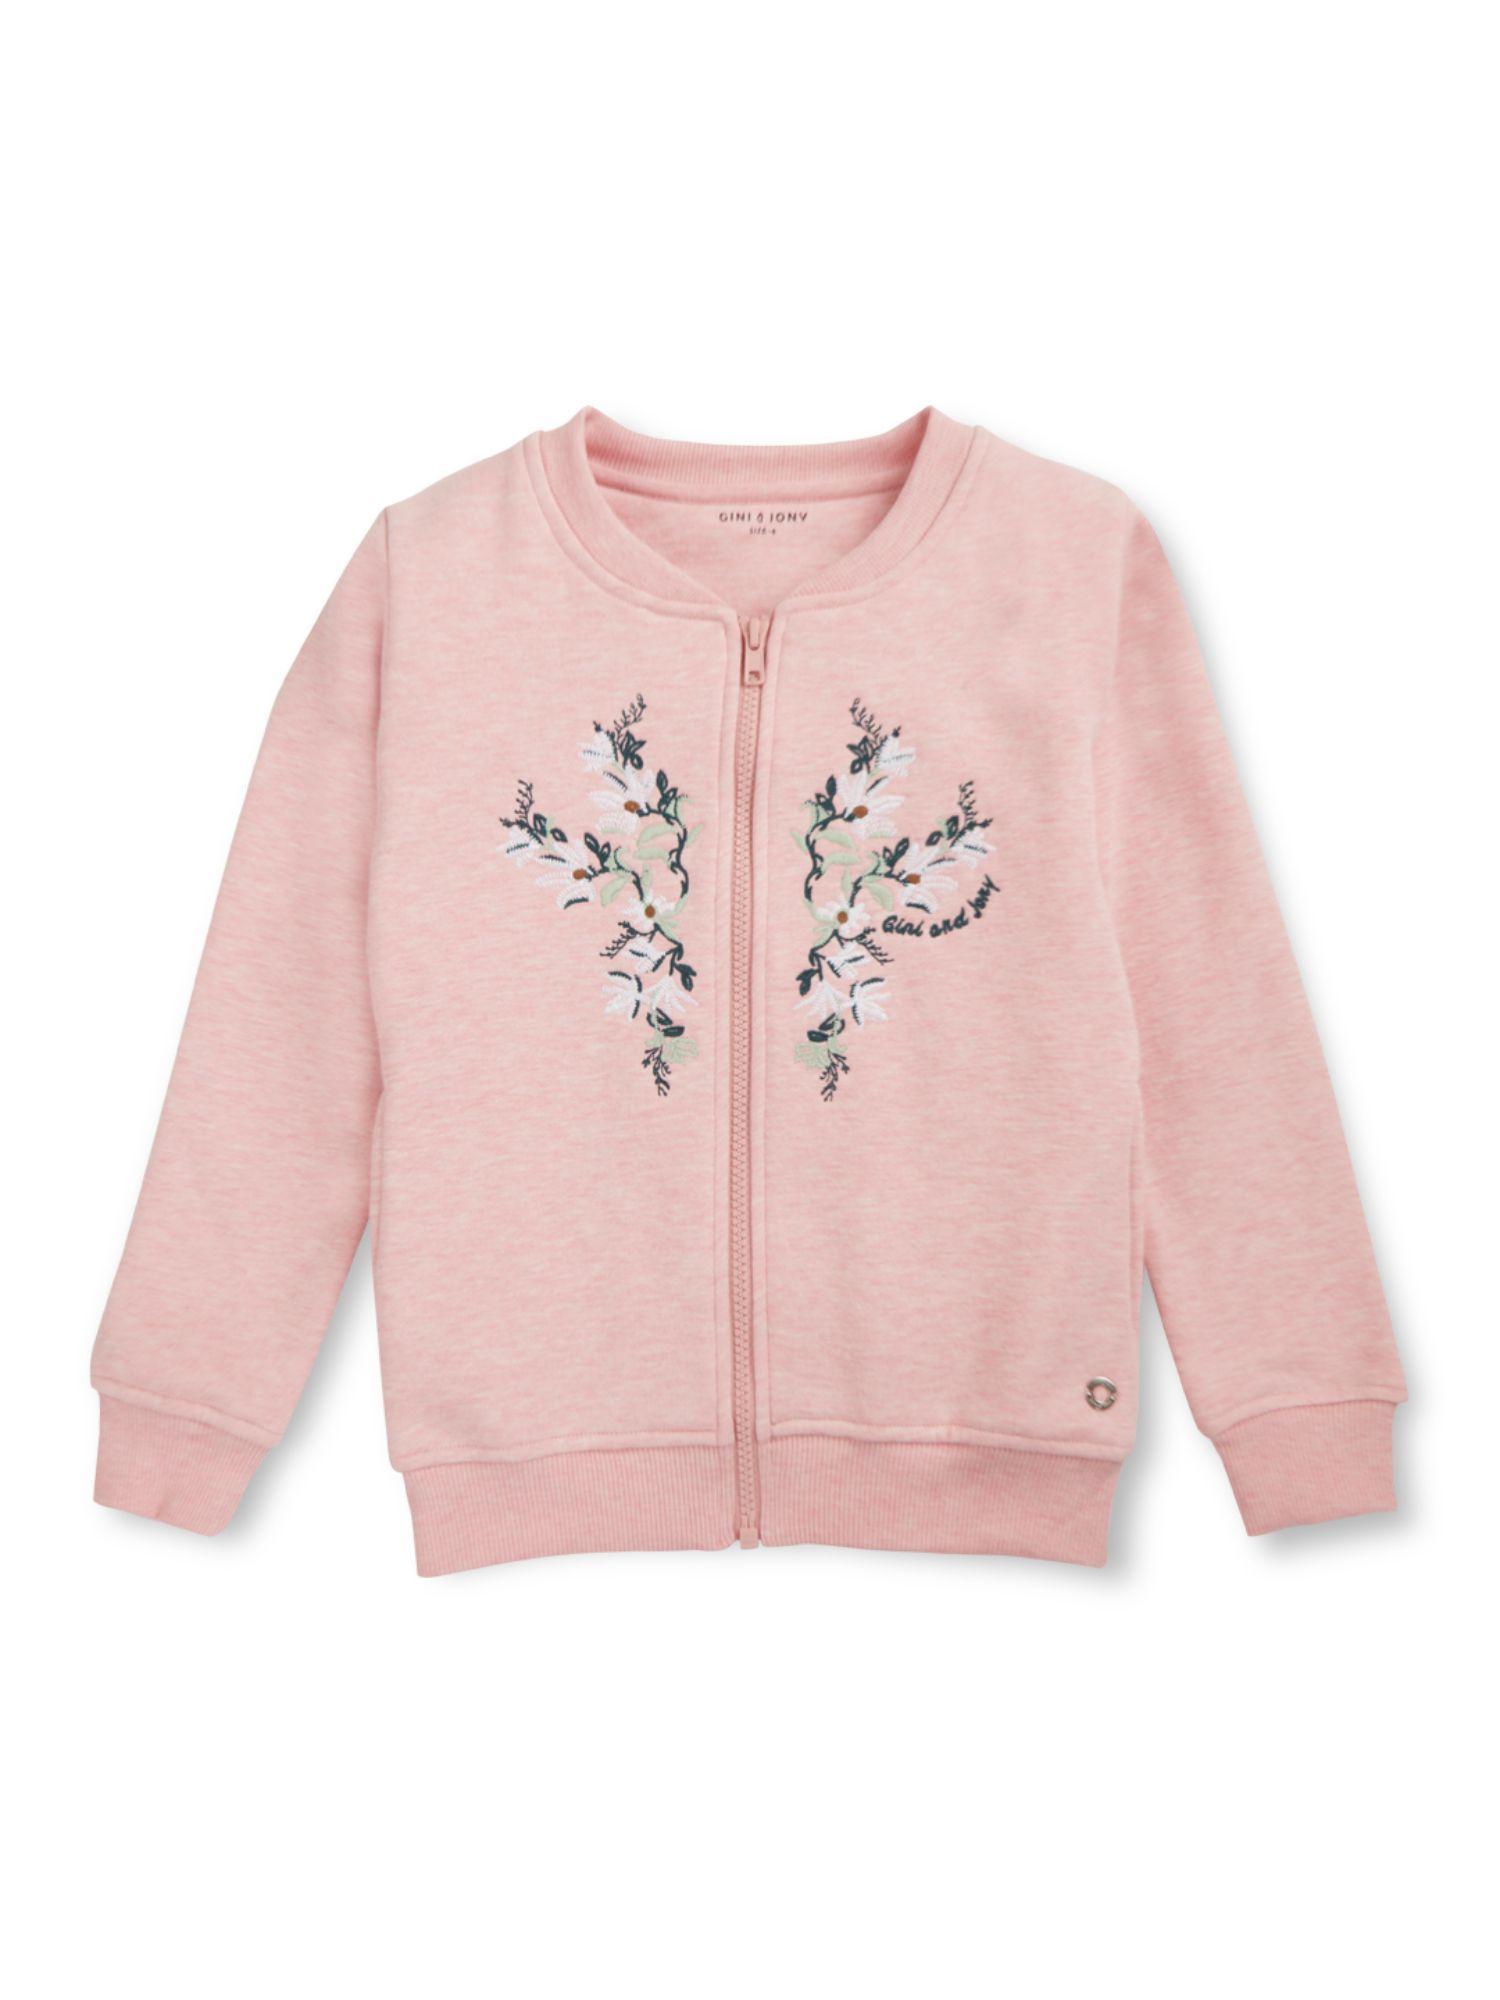 girls pink cotton full sleeves embroidered sweatshirt